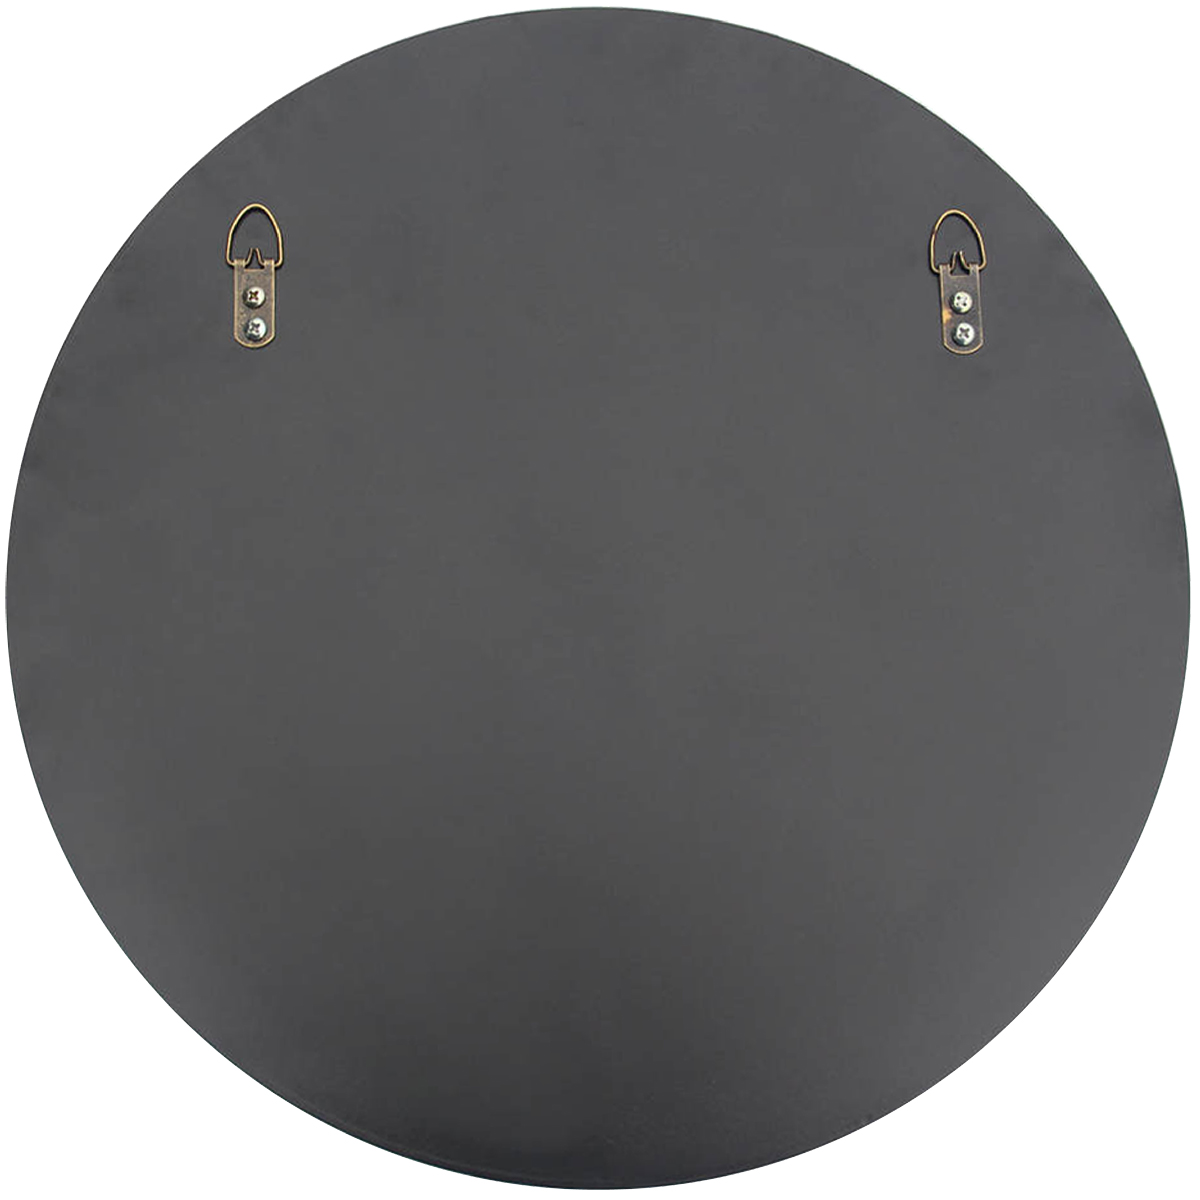 Incado Spiegel Premium Black Circle 100 cm Ø